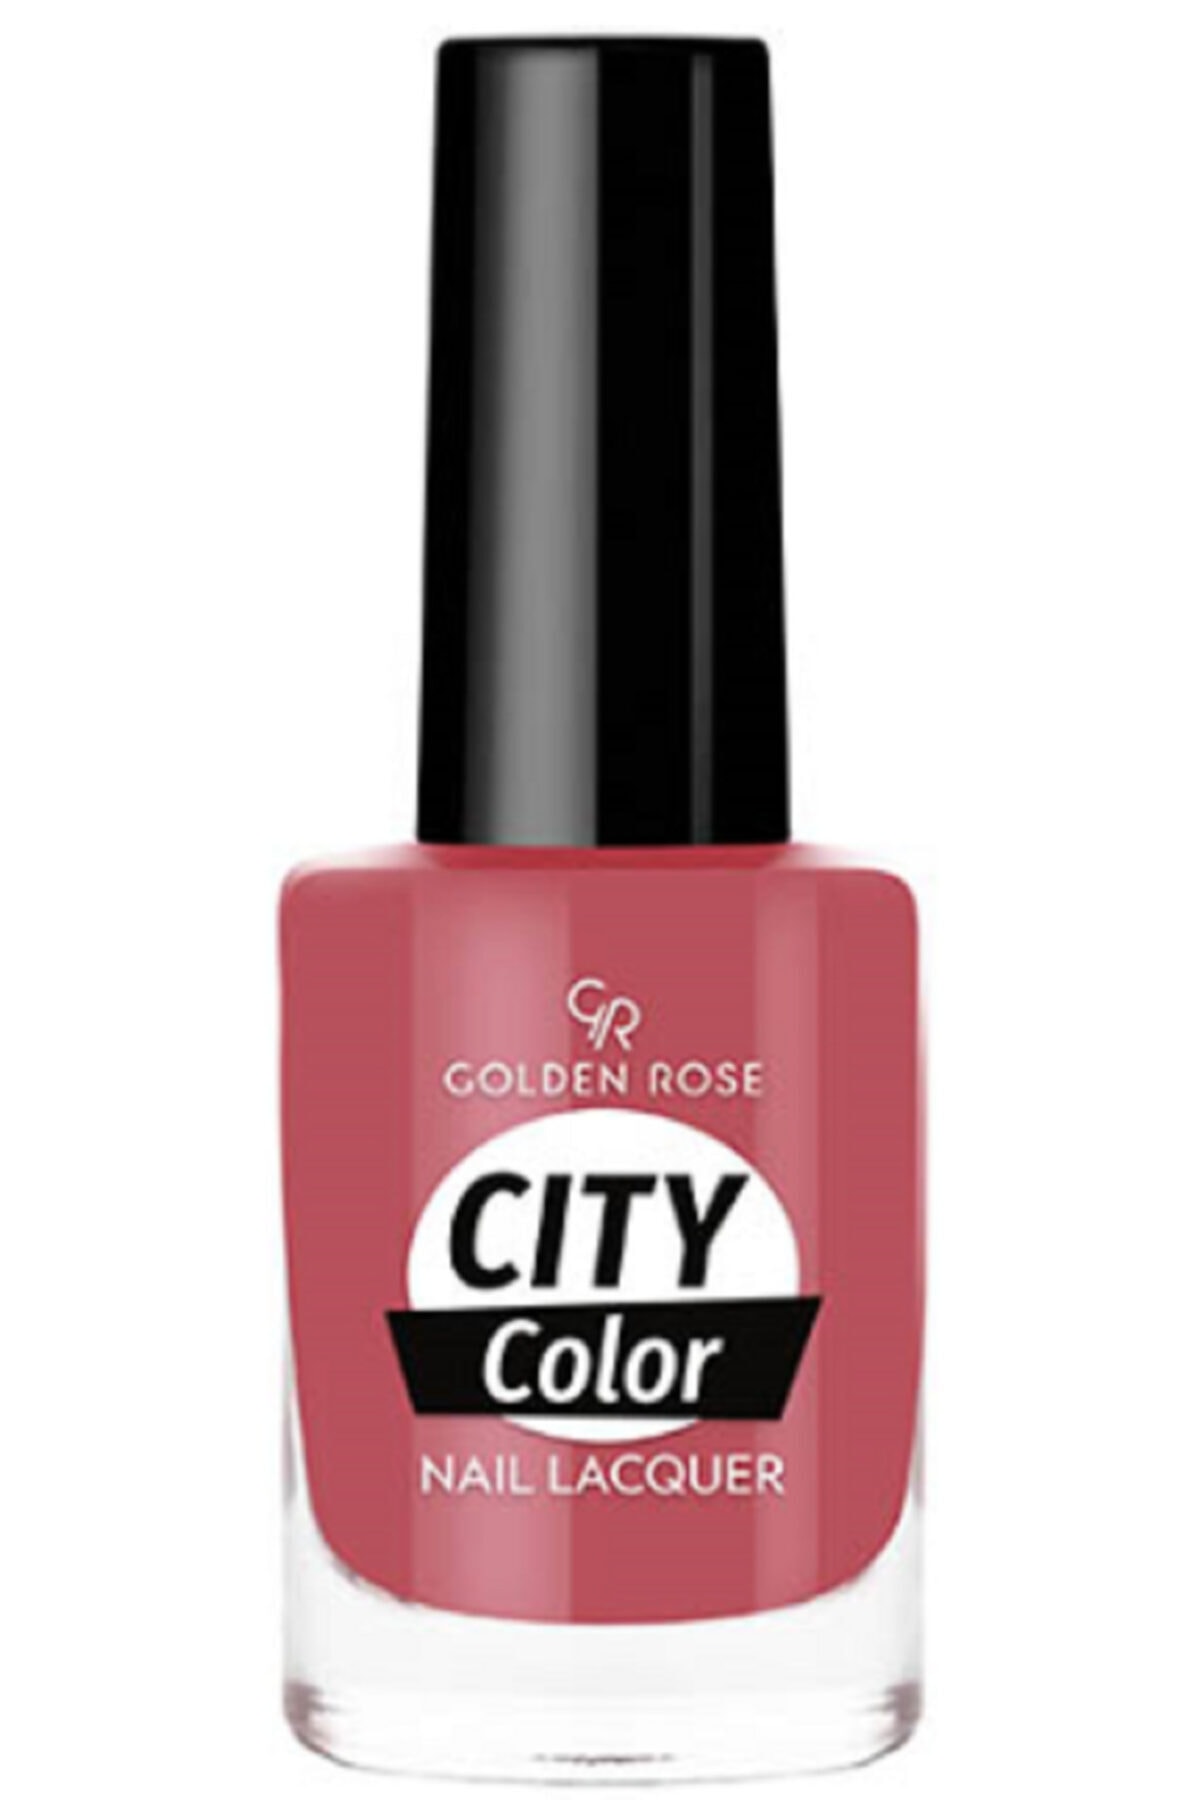 لاک ناخن سیتی کالر City color رنگ صورتی روشن شماره 06 گلدن رز Golden Rose